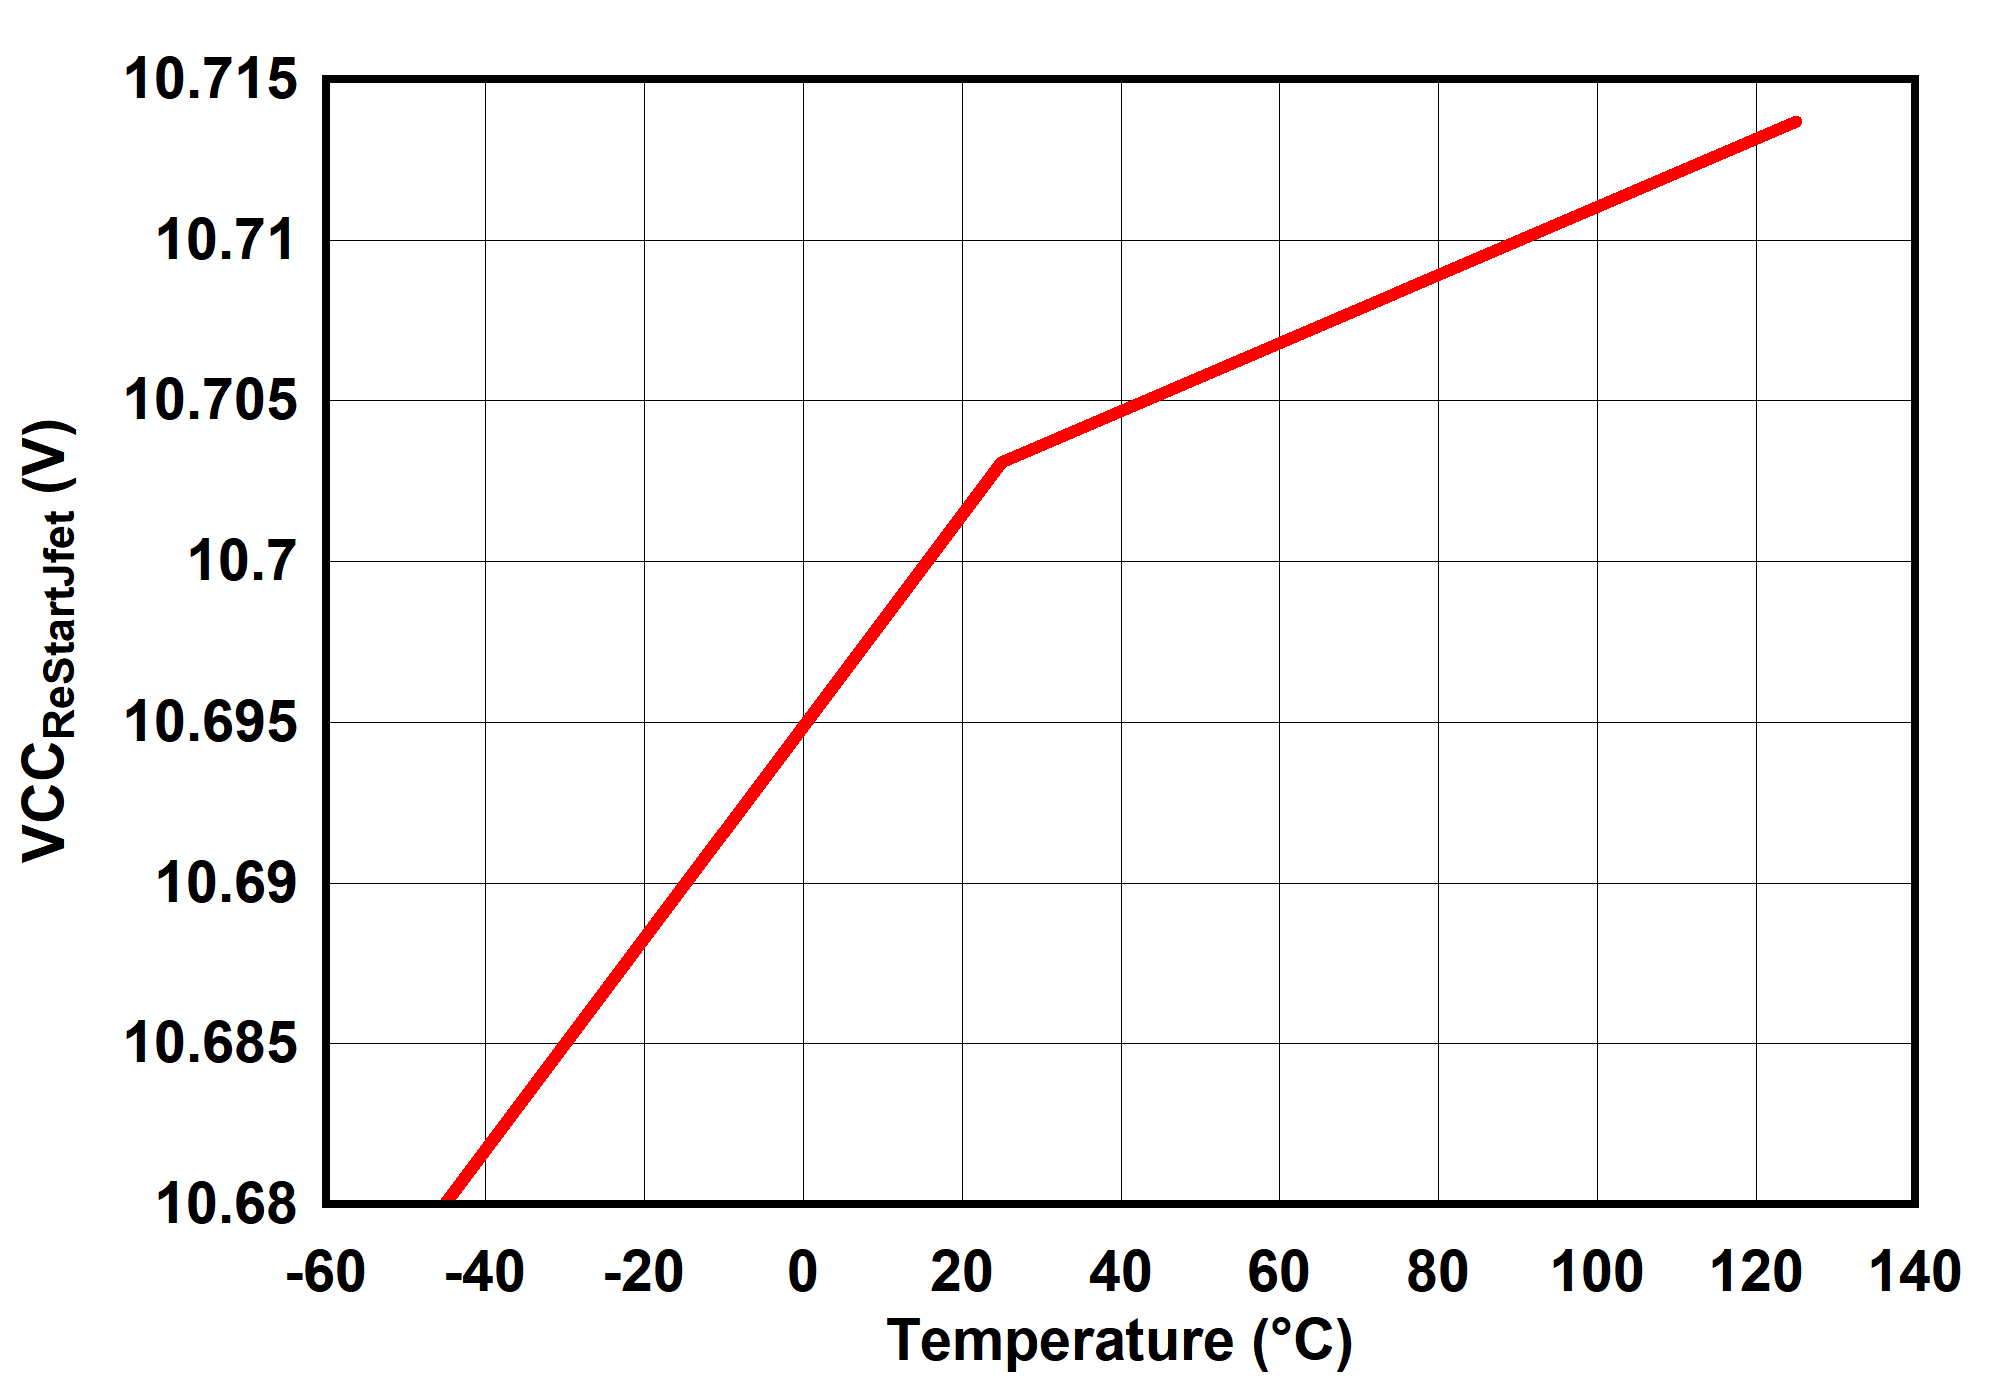 UCC25660 VCCReStartJfet vs Temperature